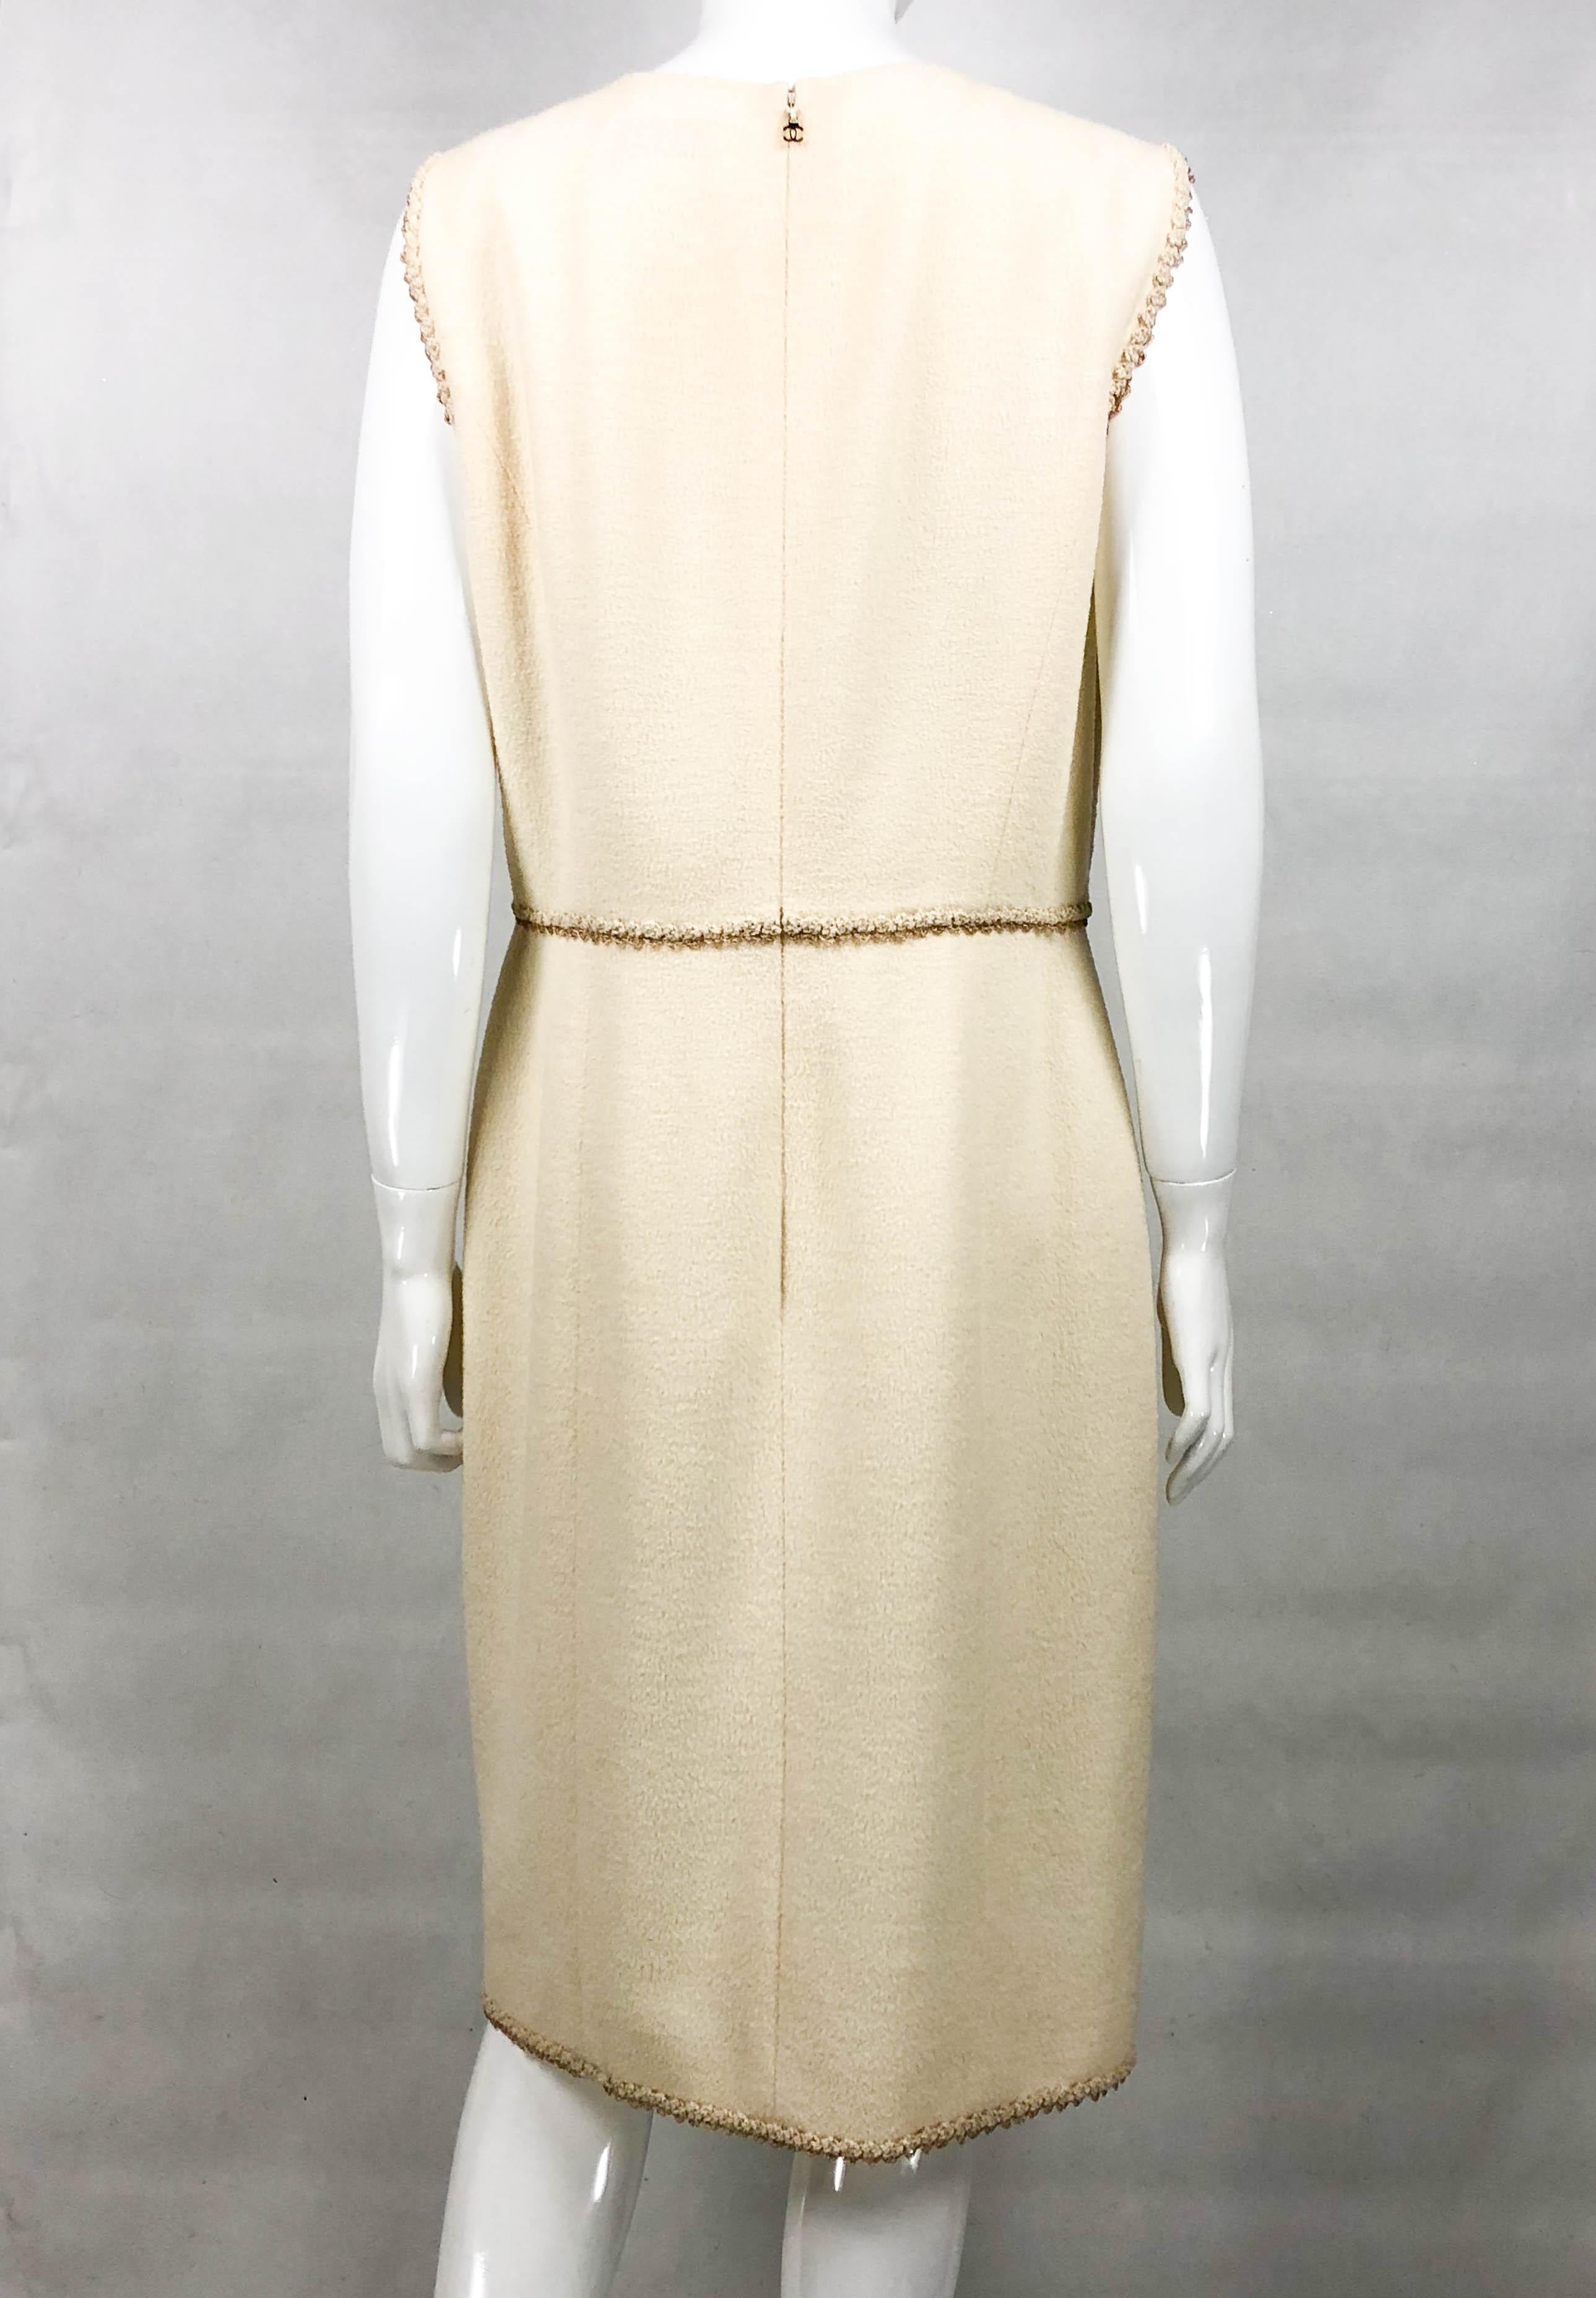 2010 Unworn Chanel Runway Look Cream Dress With Gold Thread Trim For Sale 4